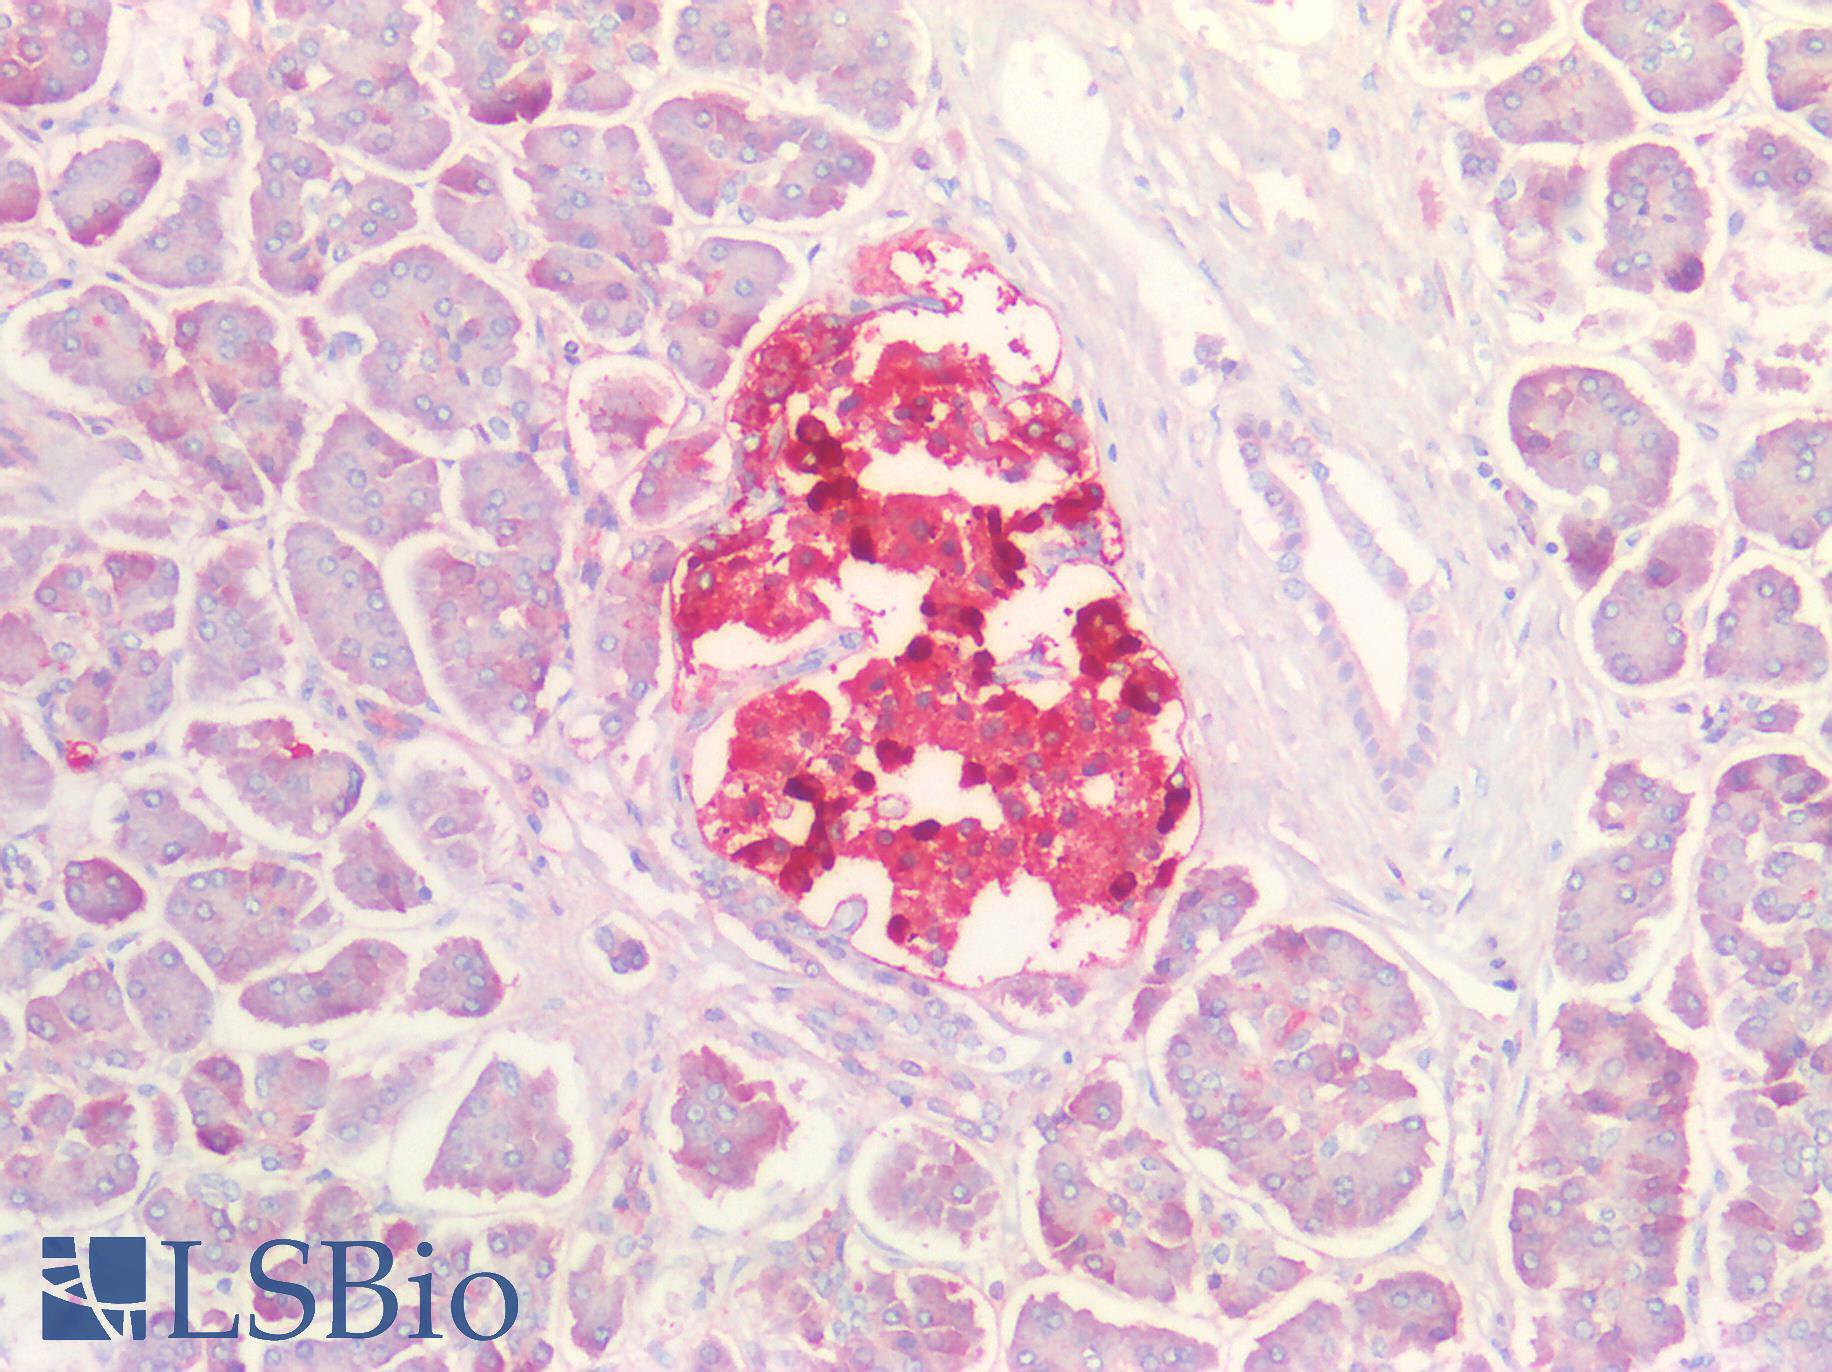 TTR / Transthyretin Antibody - Human Pancreas: Formalin-Fixed, Paraffin-Embedded (FFPE)